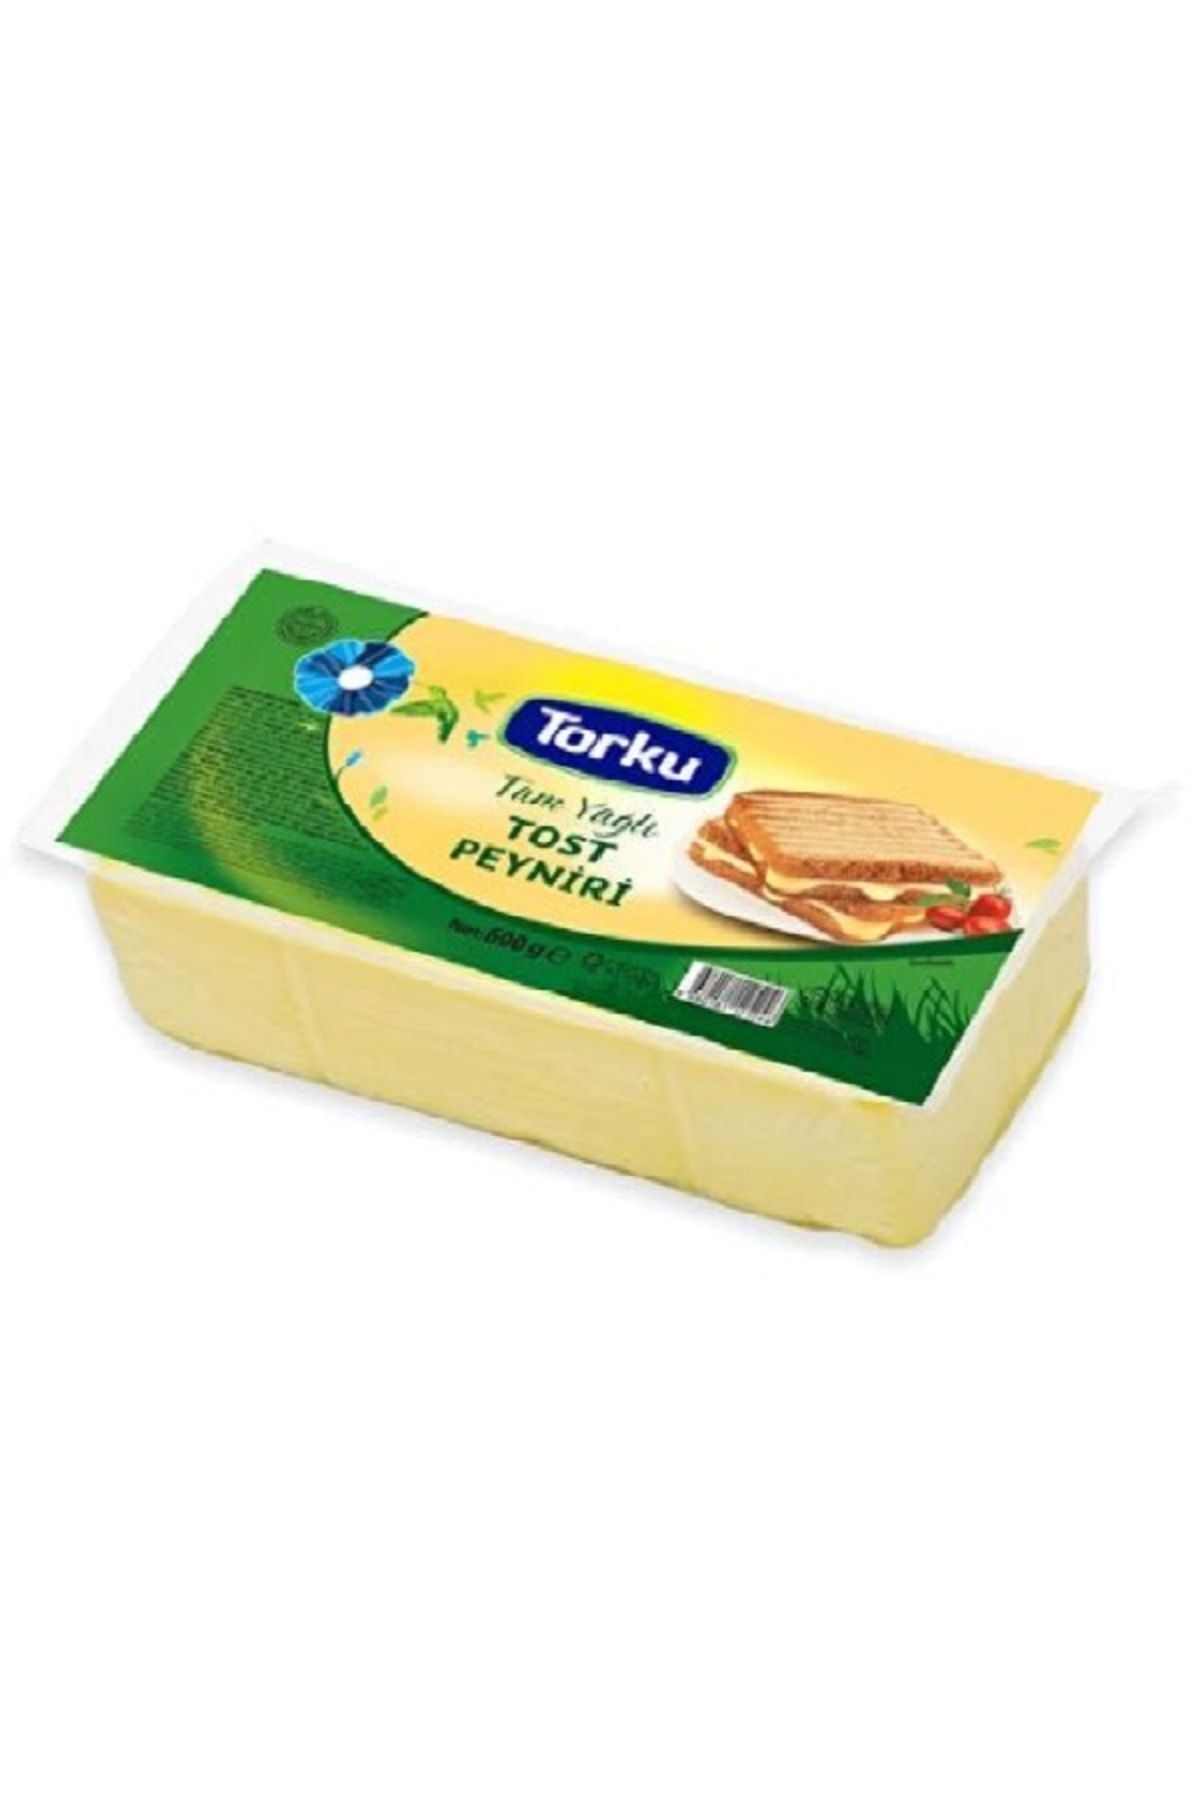 Torku Kaşar Tost Peyniri 600 gr